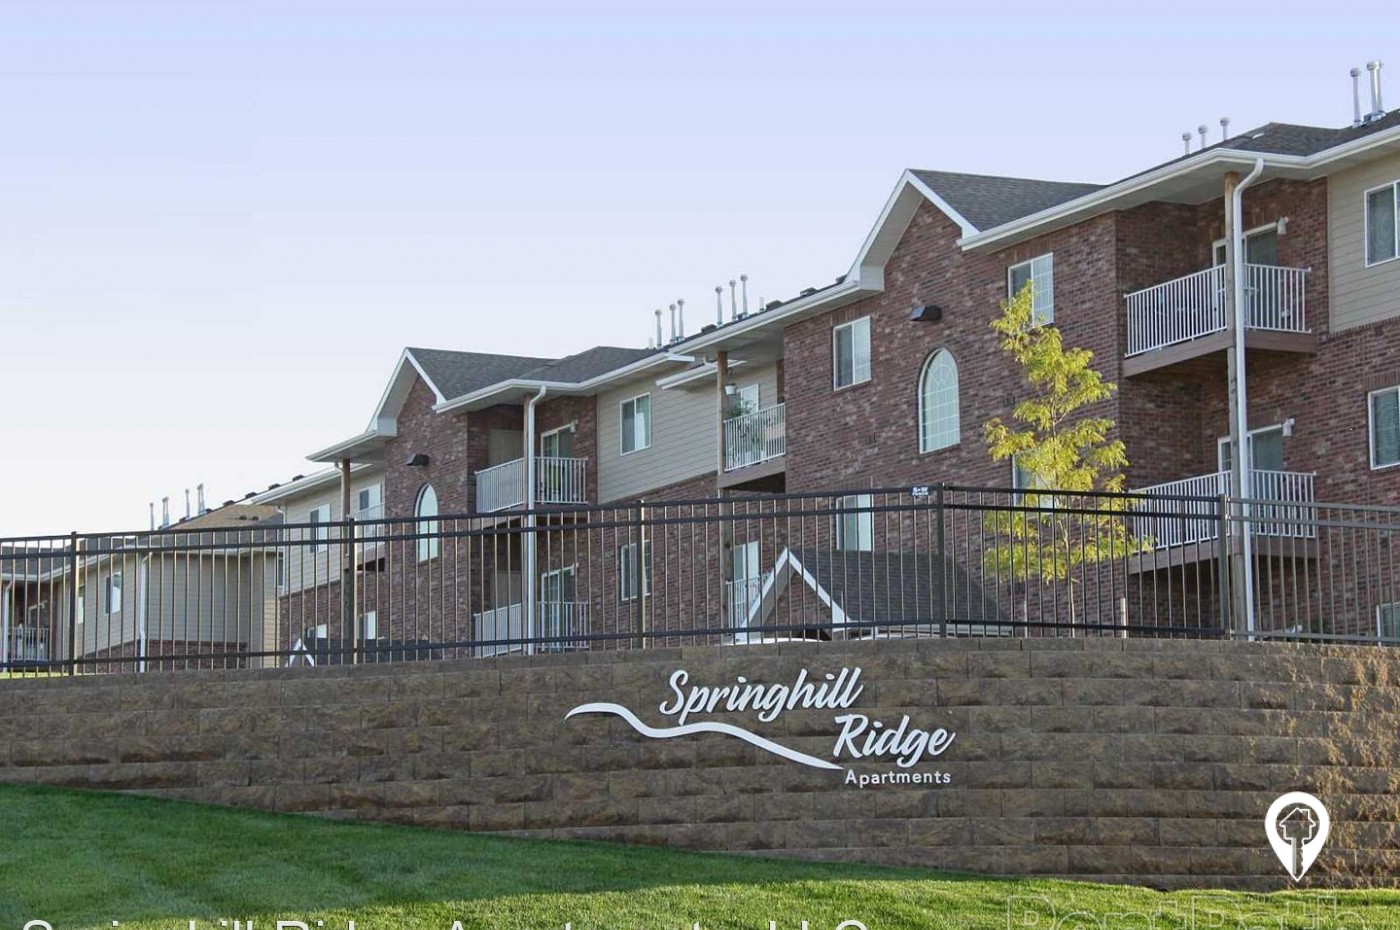 Springhill Ridge Apartments